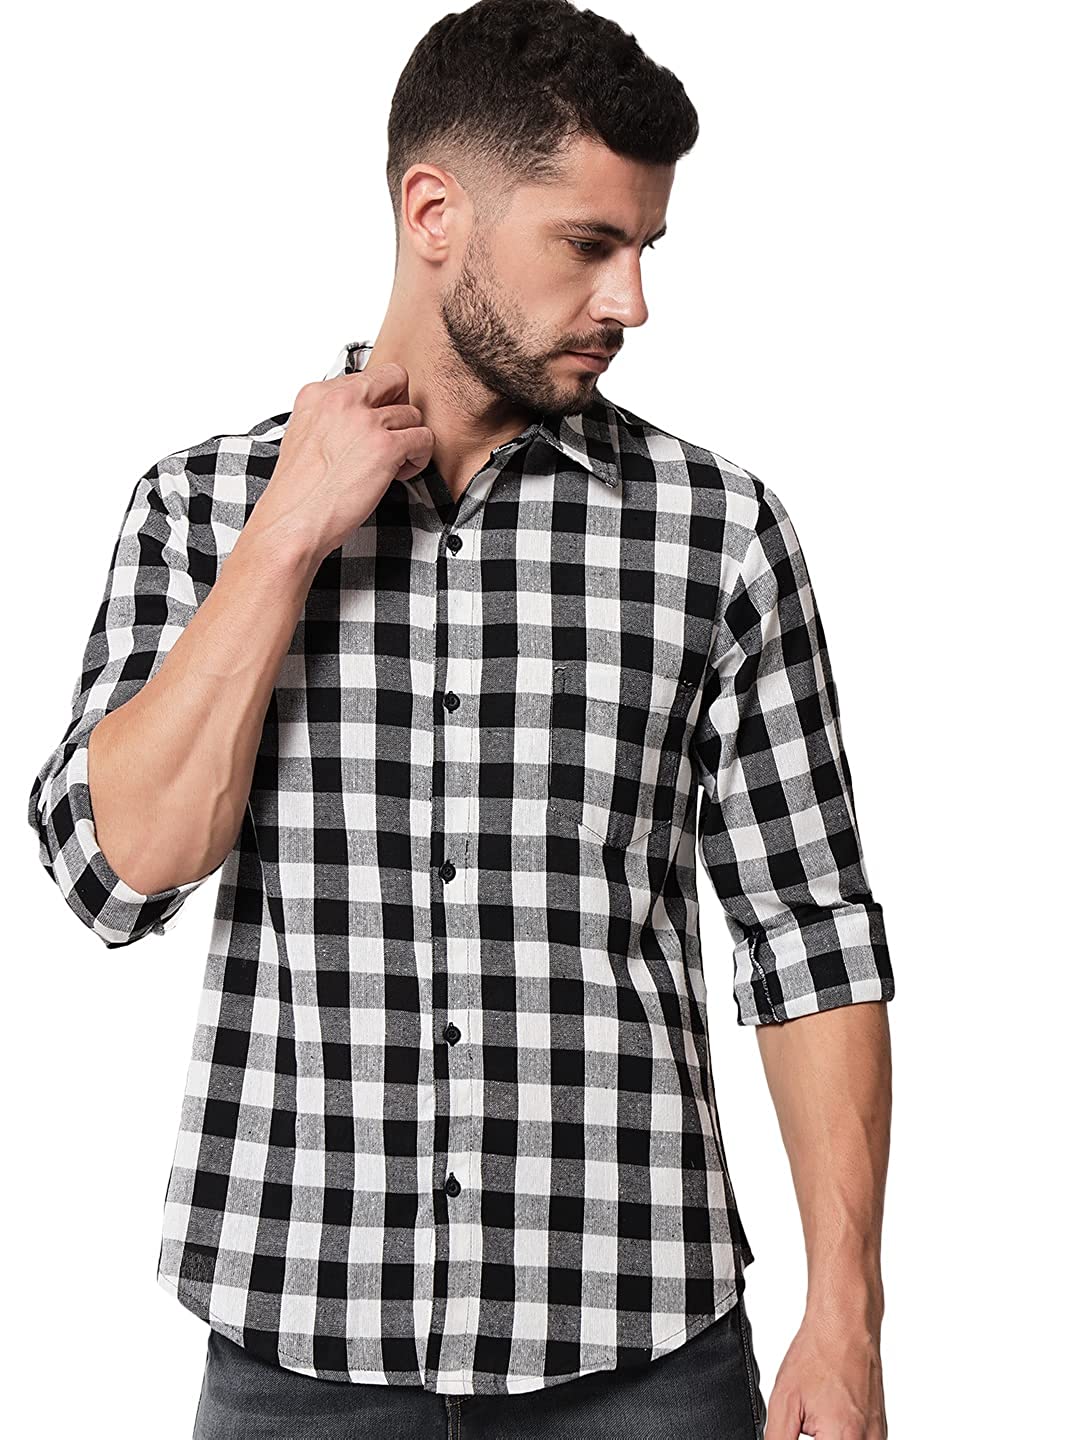 Vastraa Fusion Men's Cotton Checkered Shirt